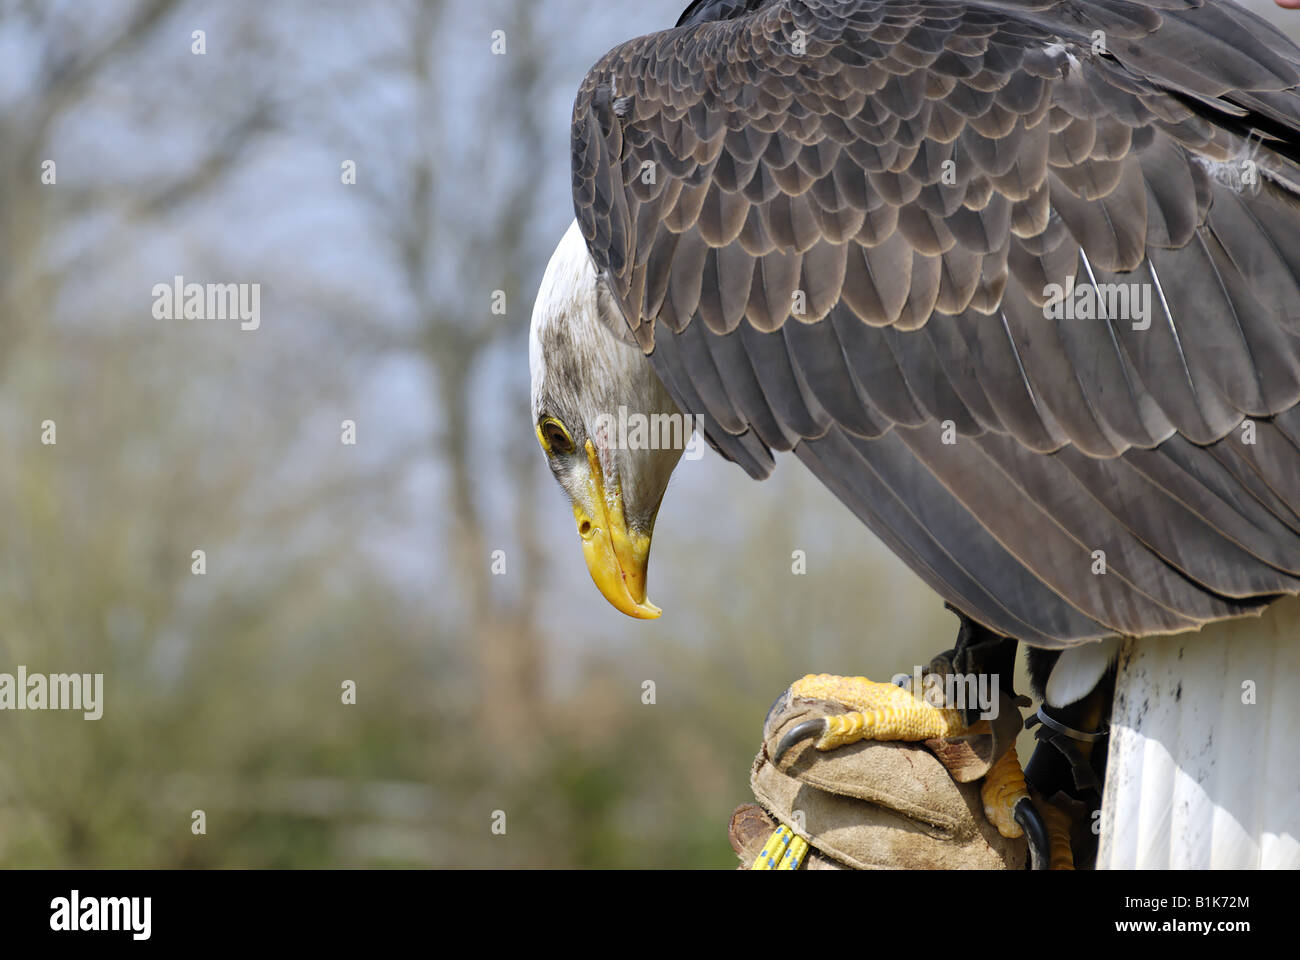 Bald Eagle (Haliaeetus leucocephalus) on Falconers glove Stock Photo